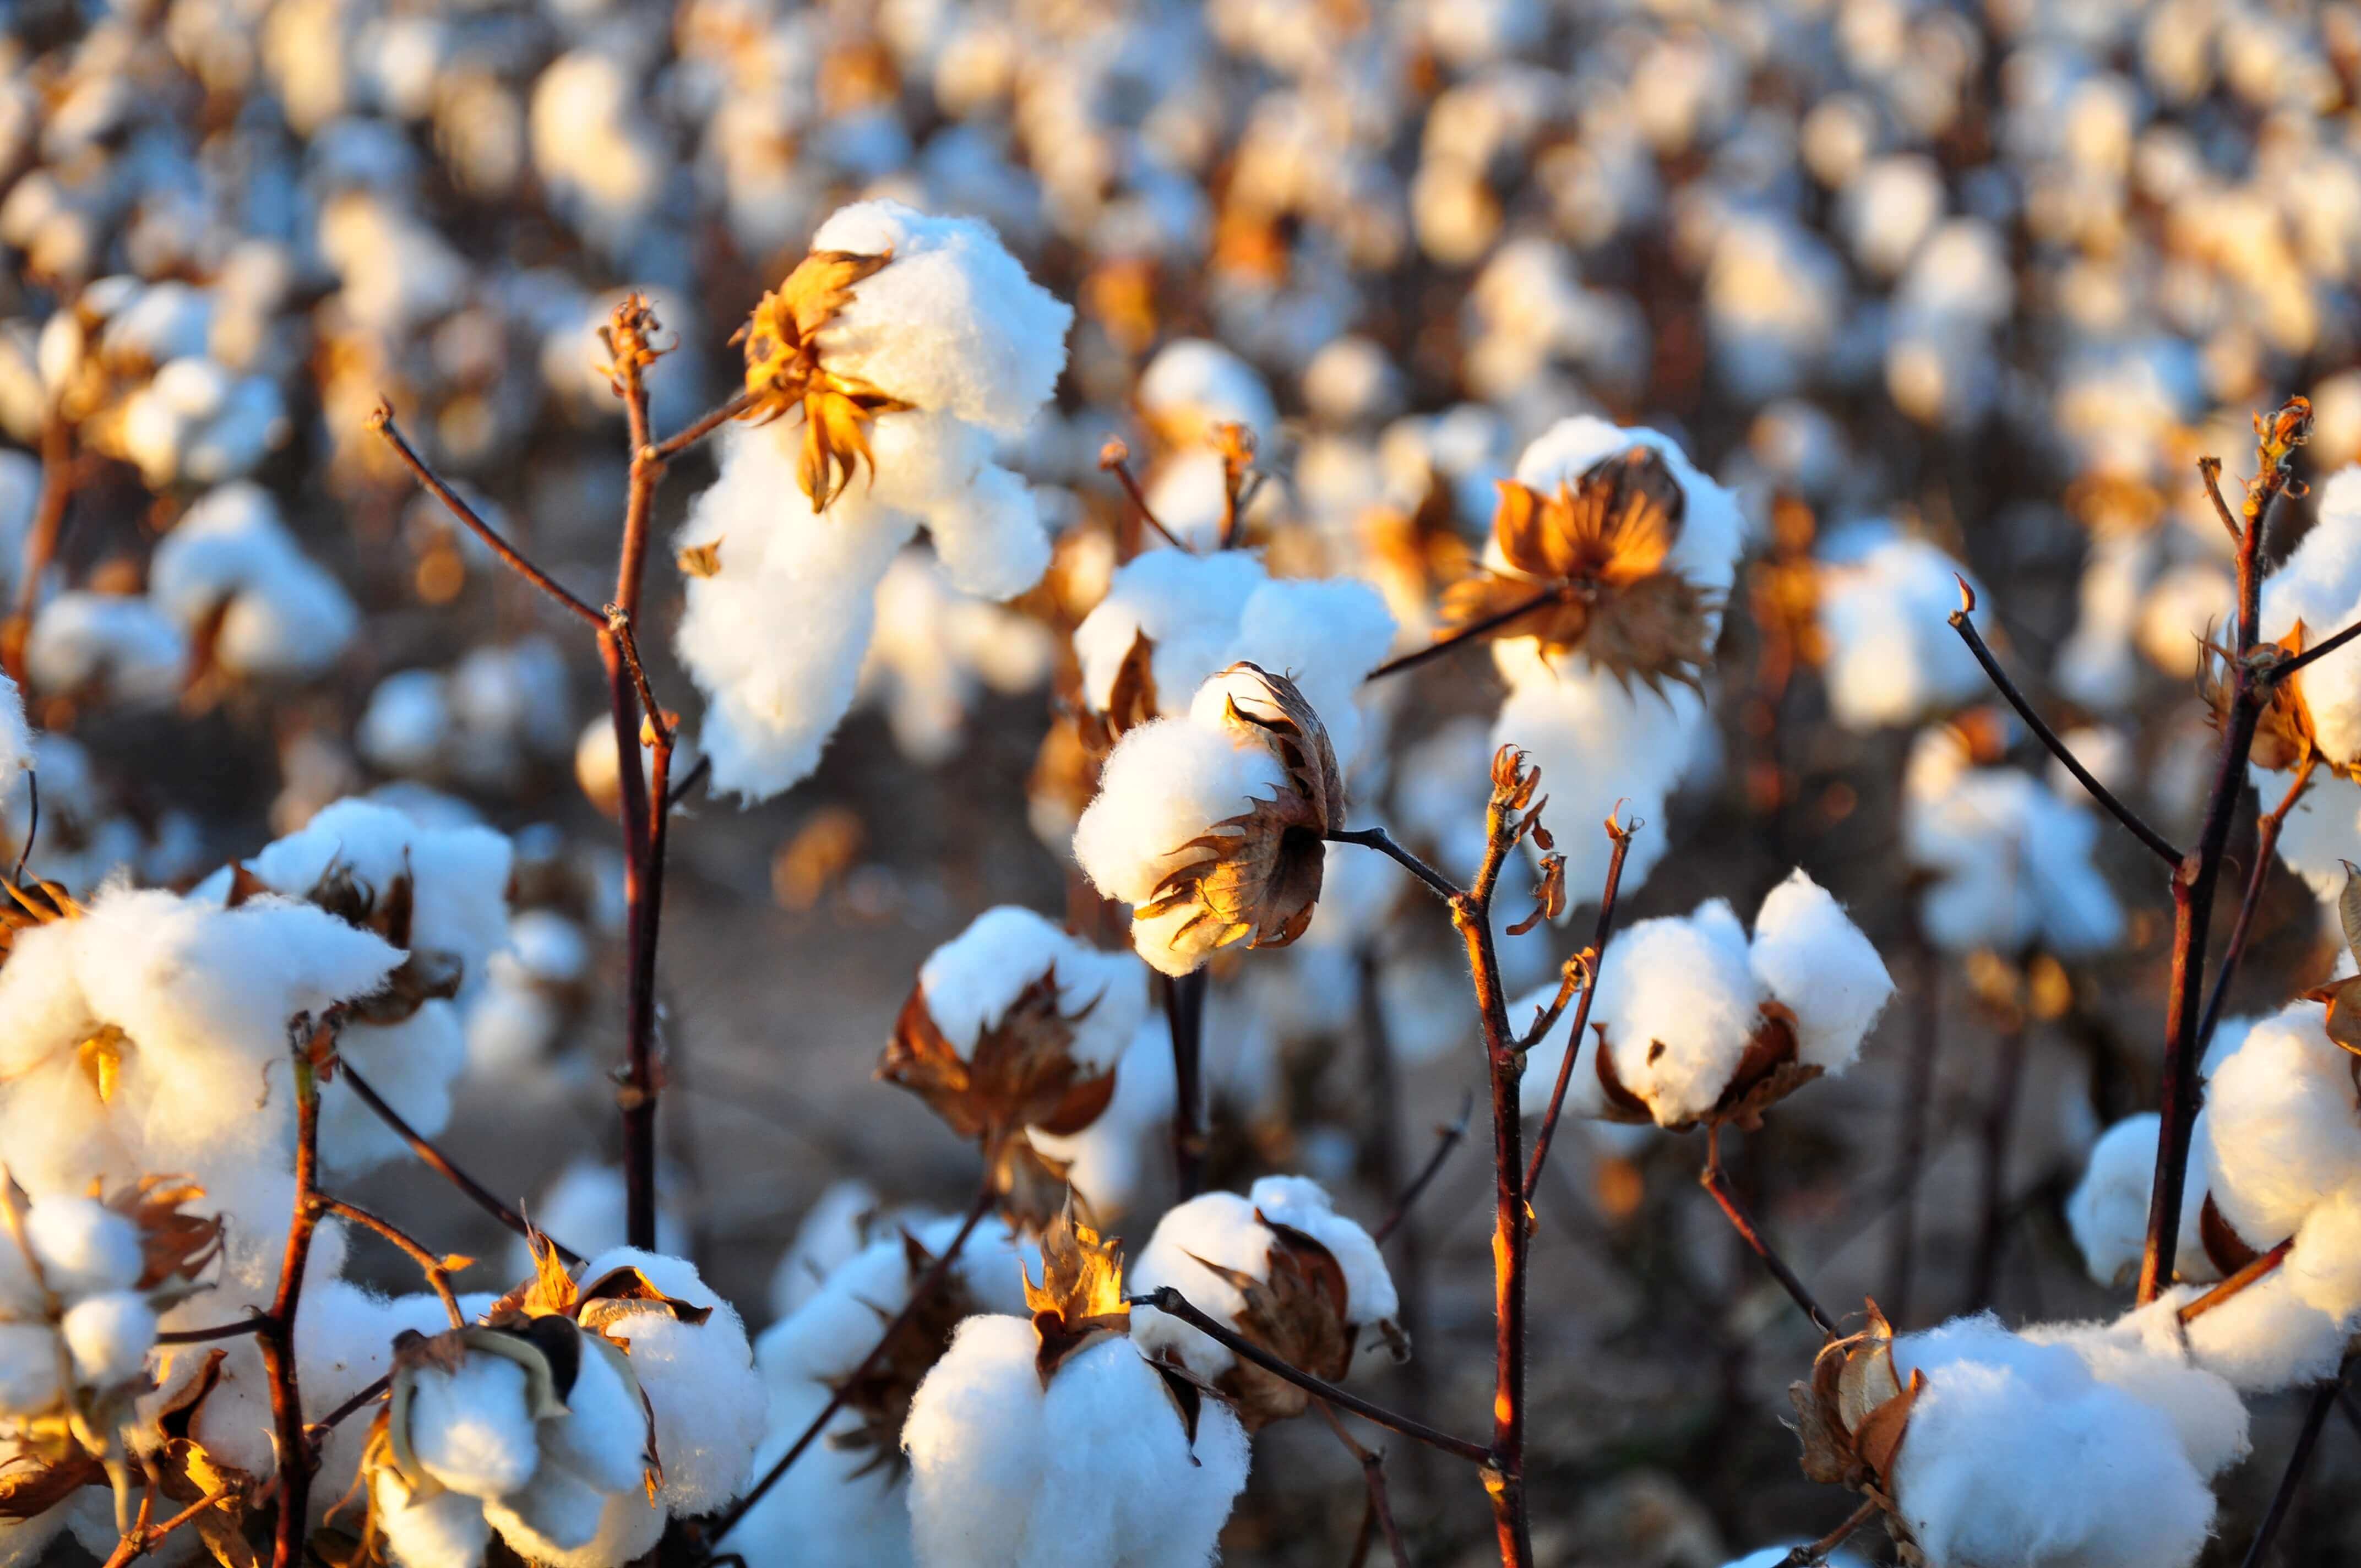 Campo de algodón